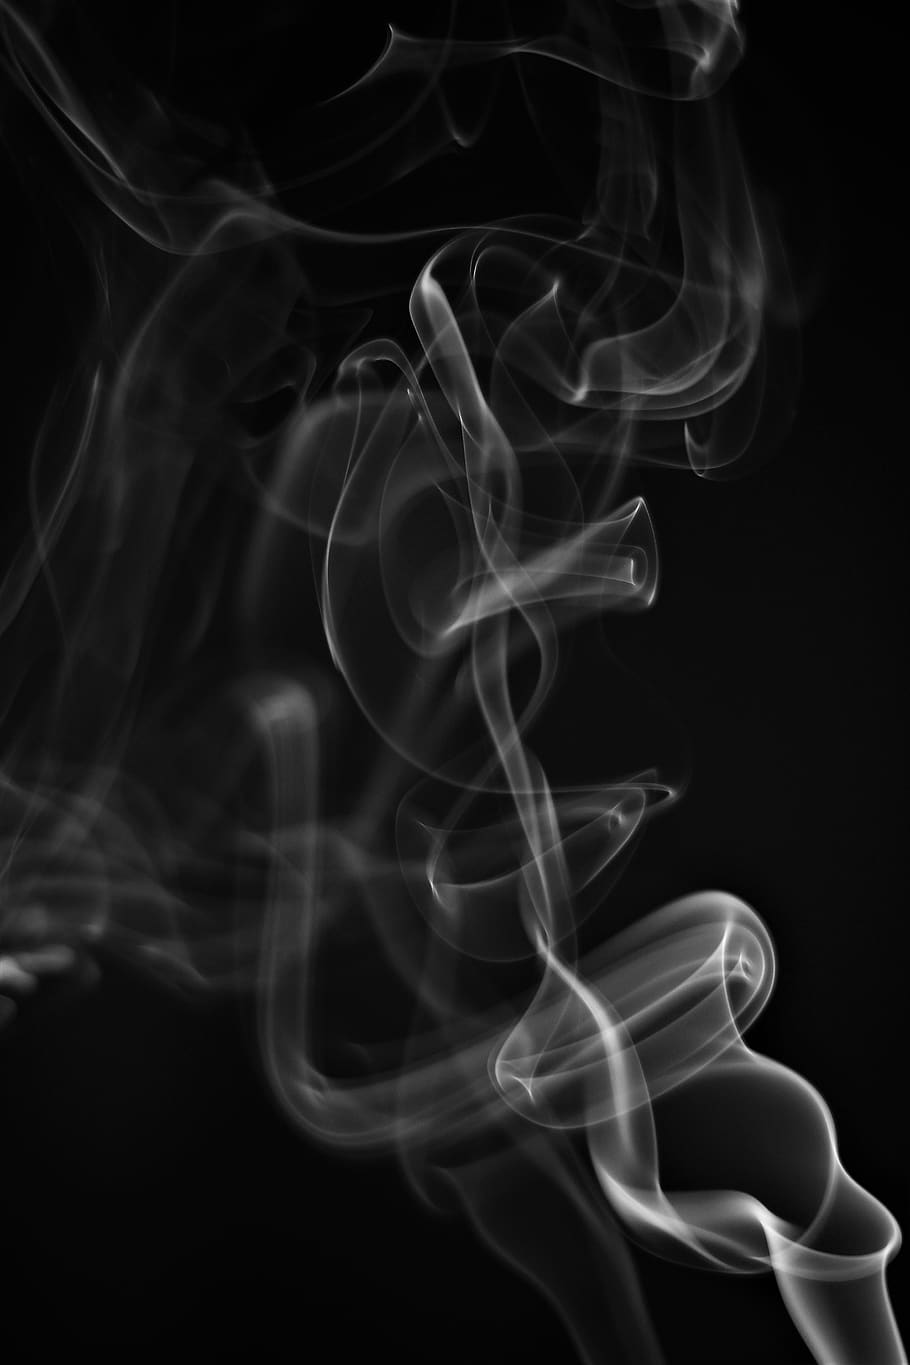 fumaça, vapor, aroma, incenso, vaping, ar, fluxo, fumaça - estrutura física, fundo preto, tiro do estúdio